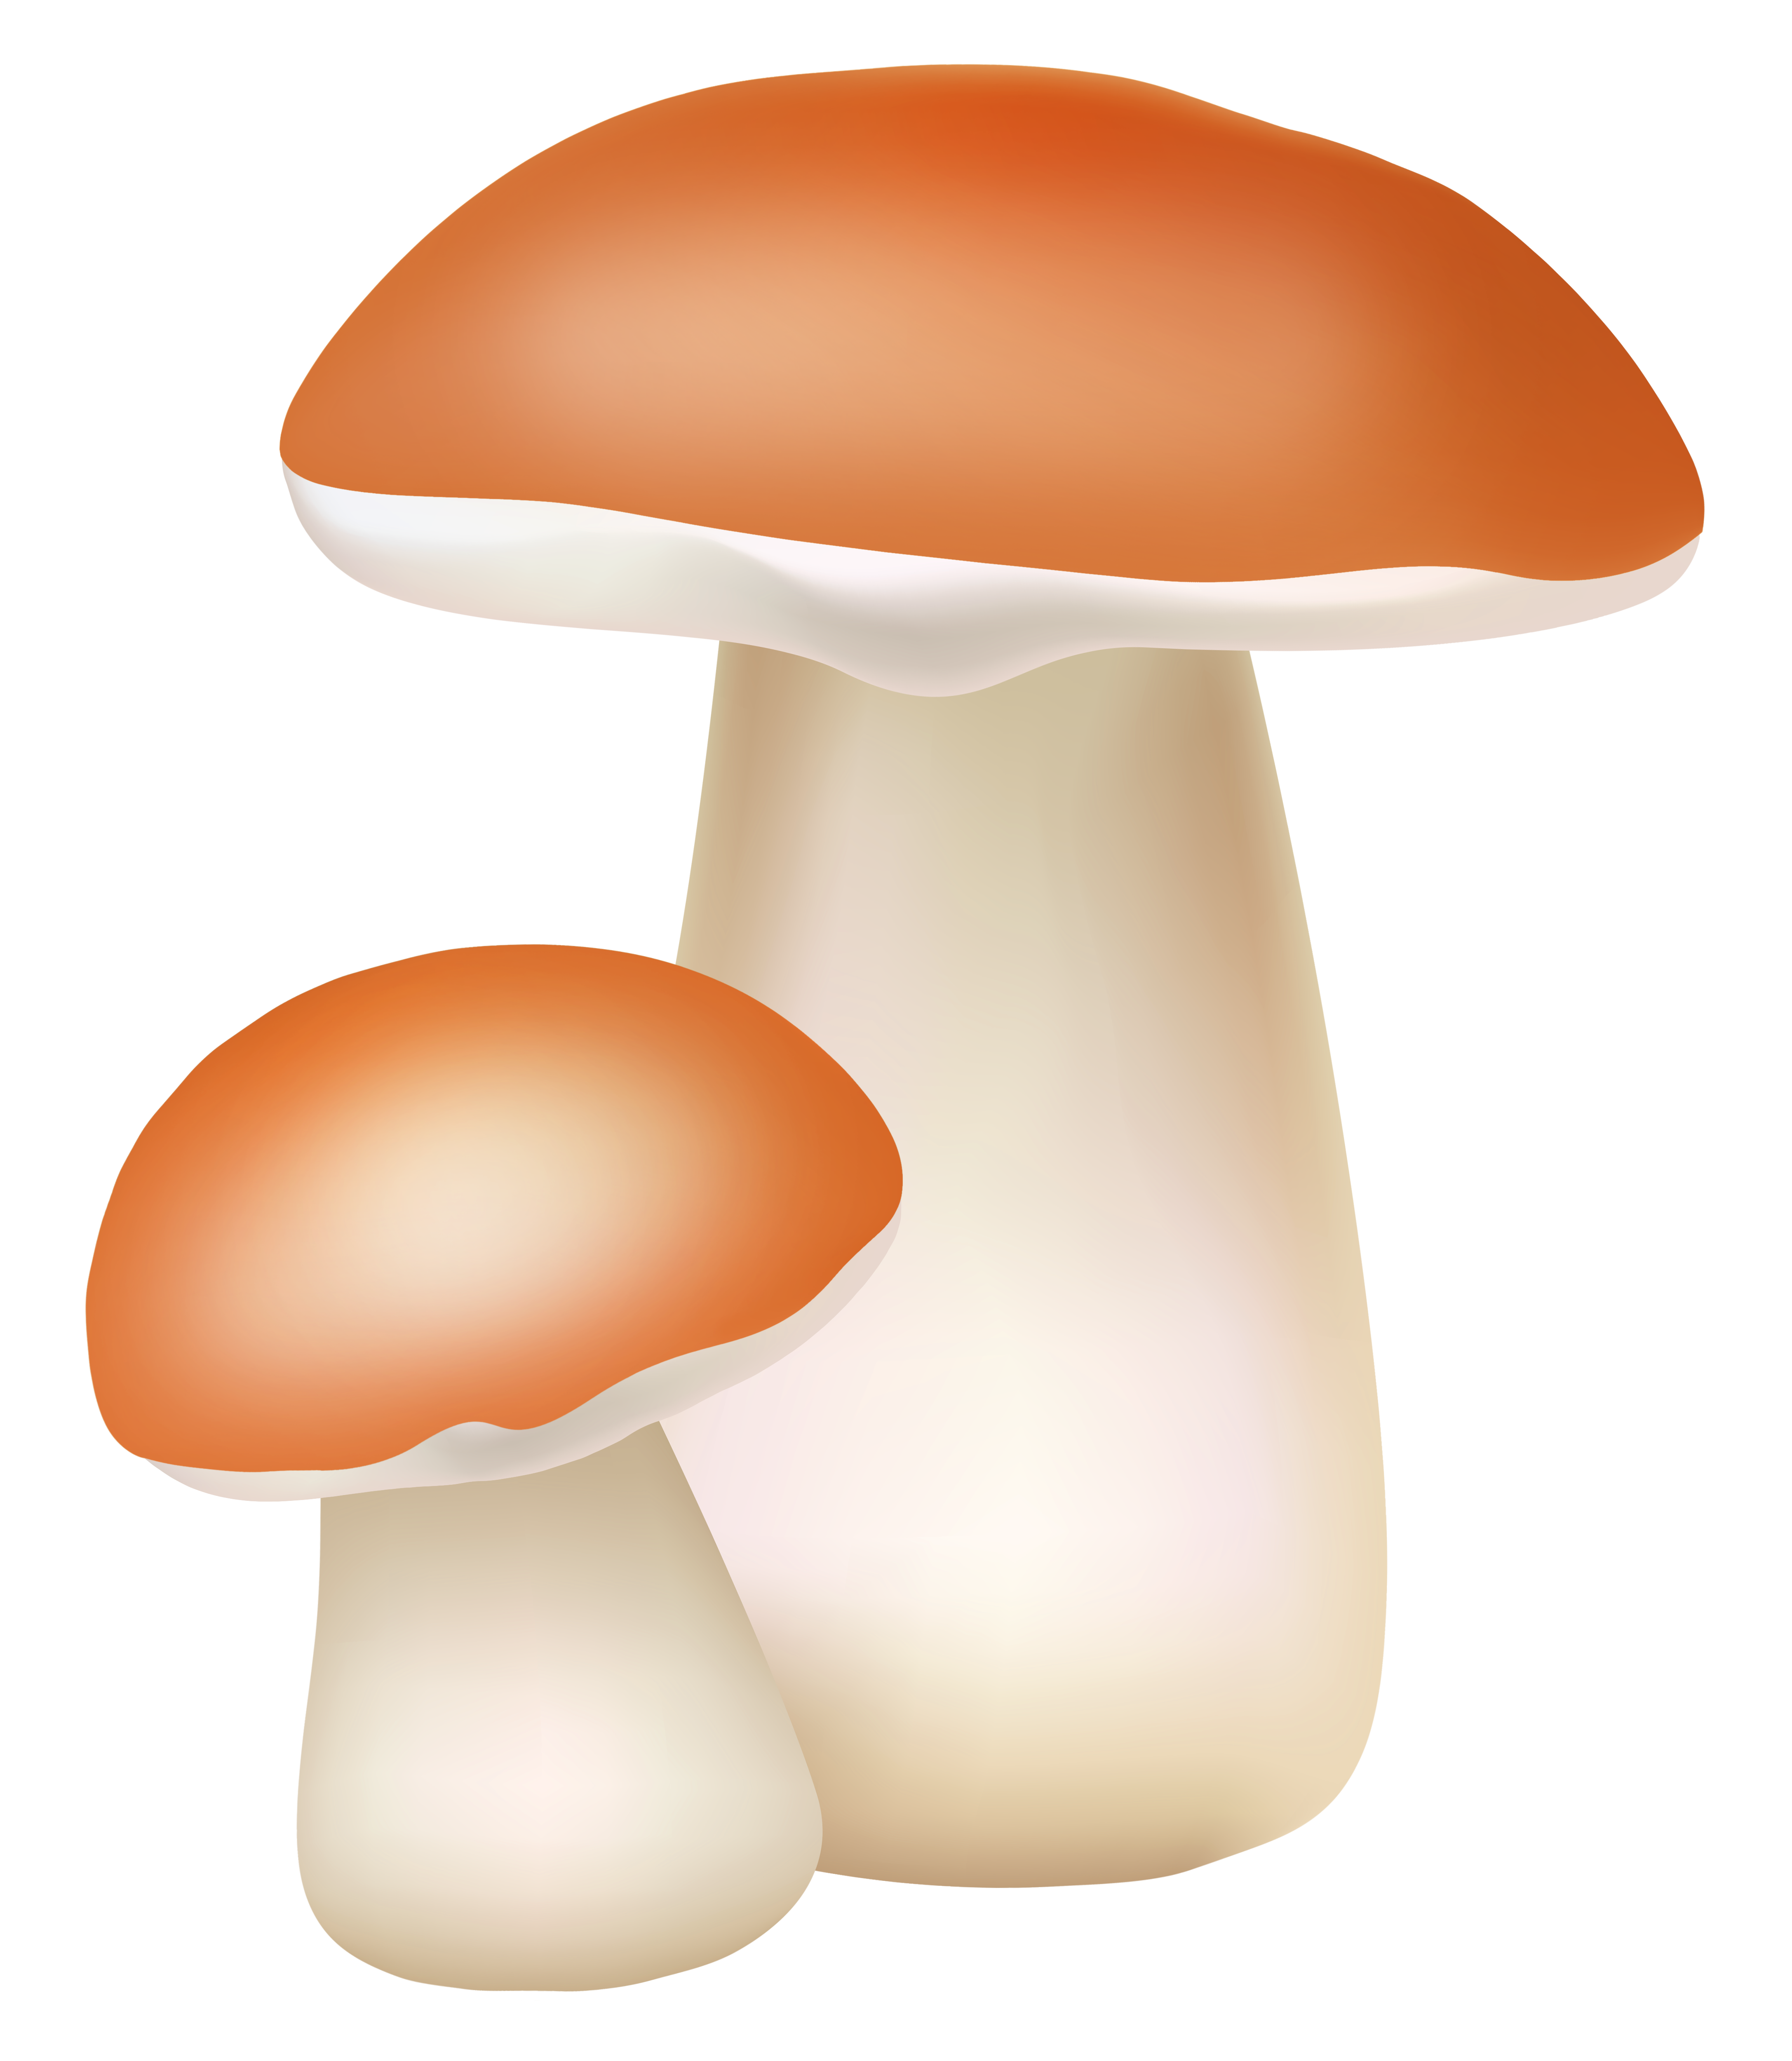 Two png cliaprt best. Mushrooms clipart brown mushroom